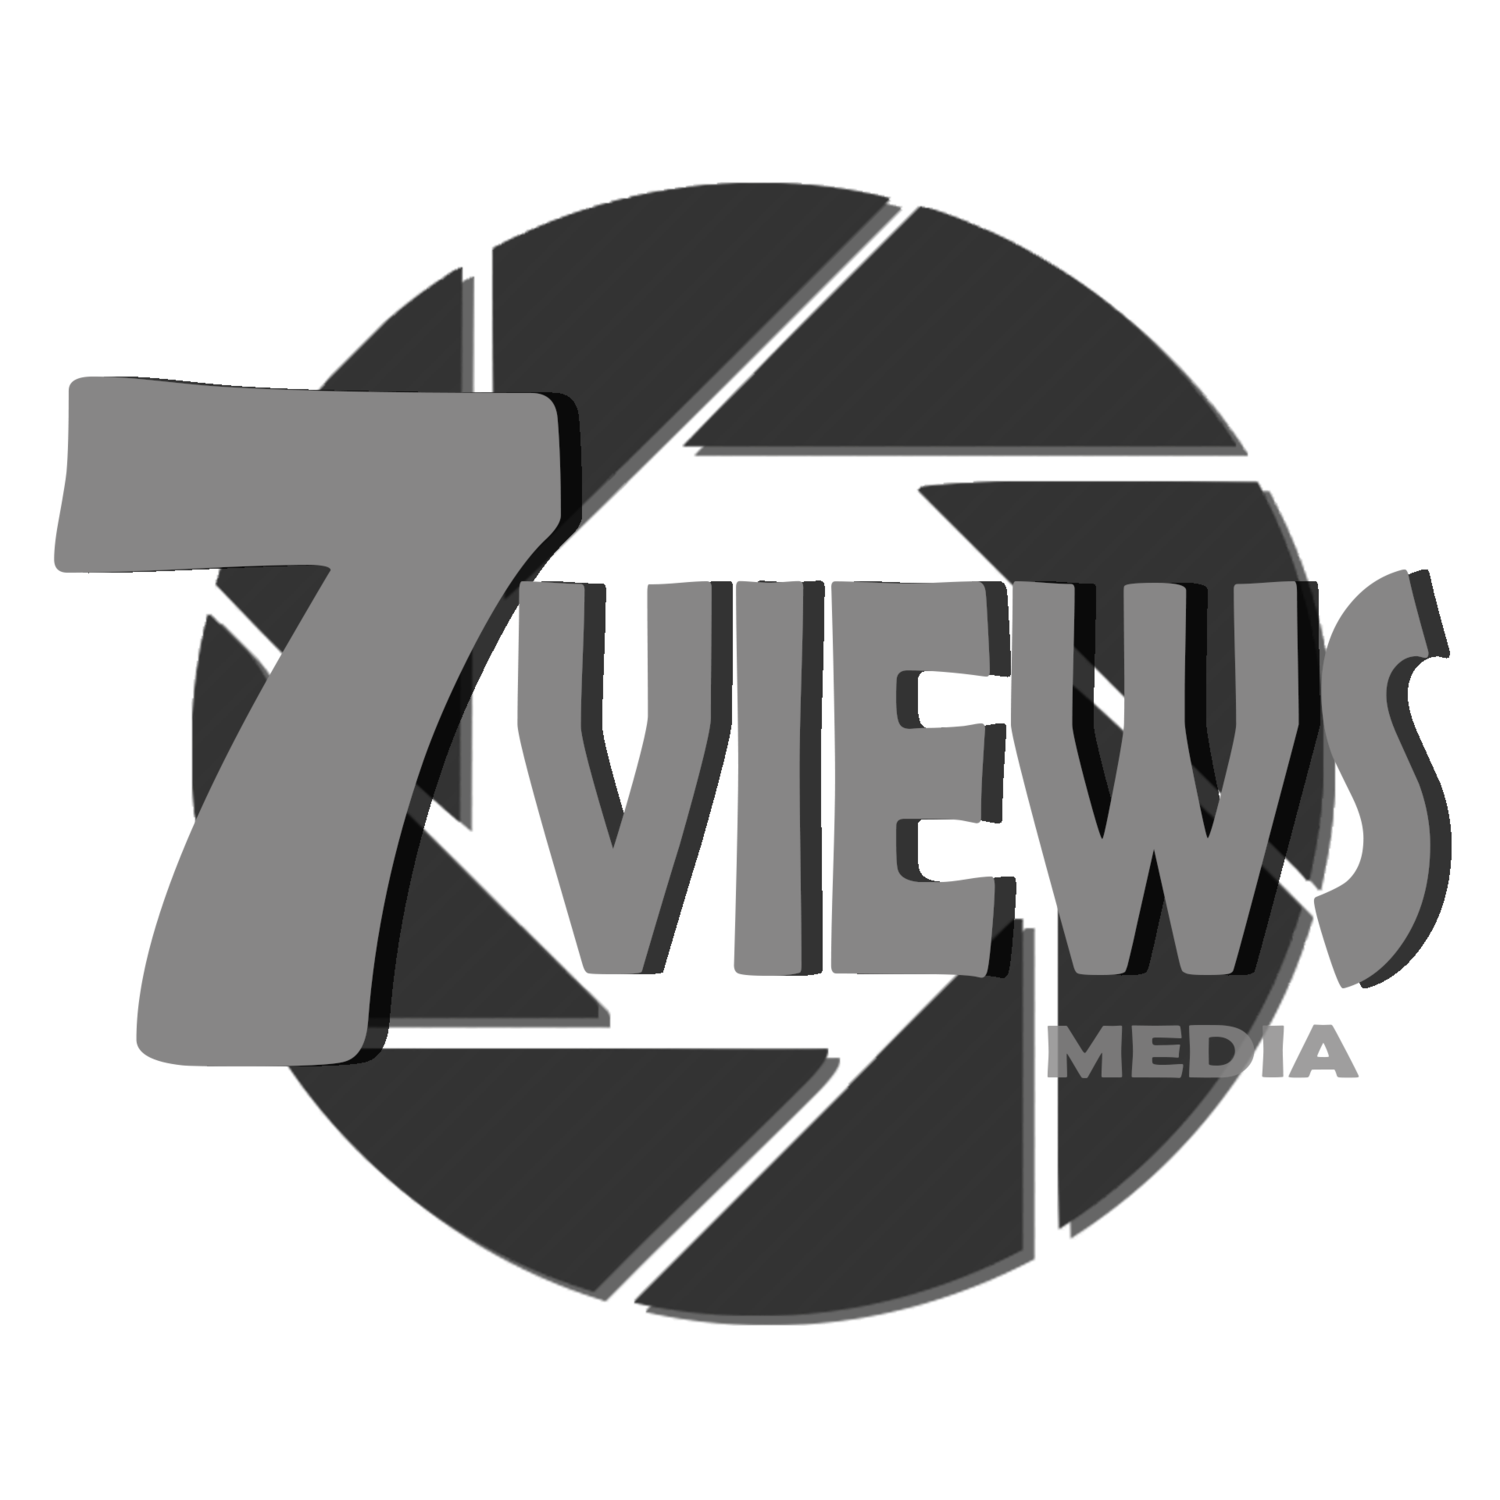 7 Views Media